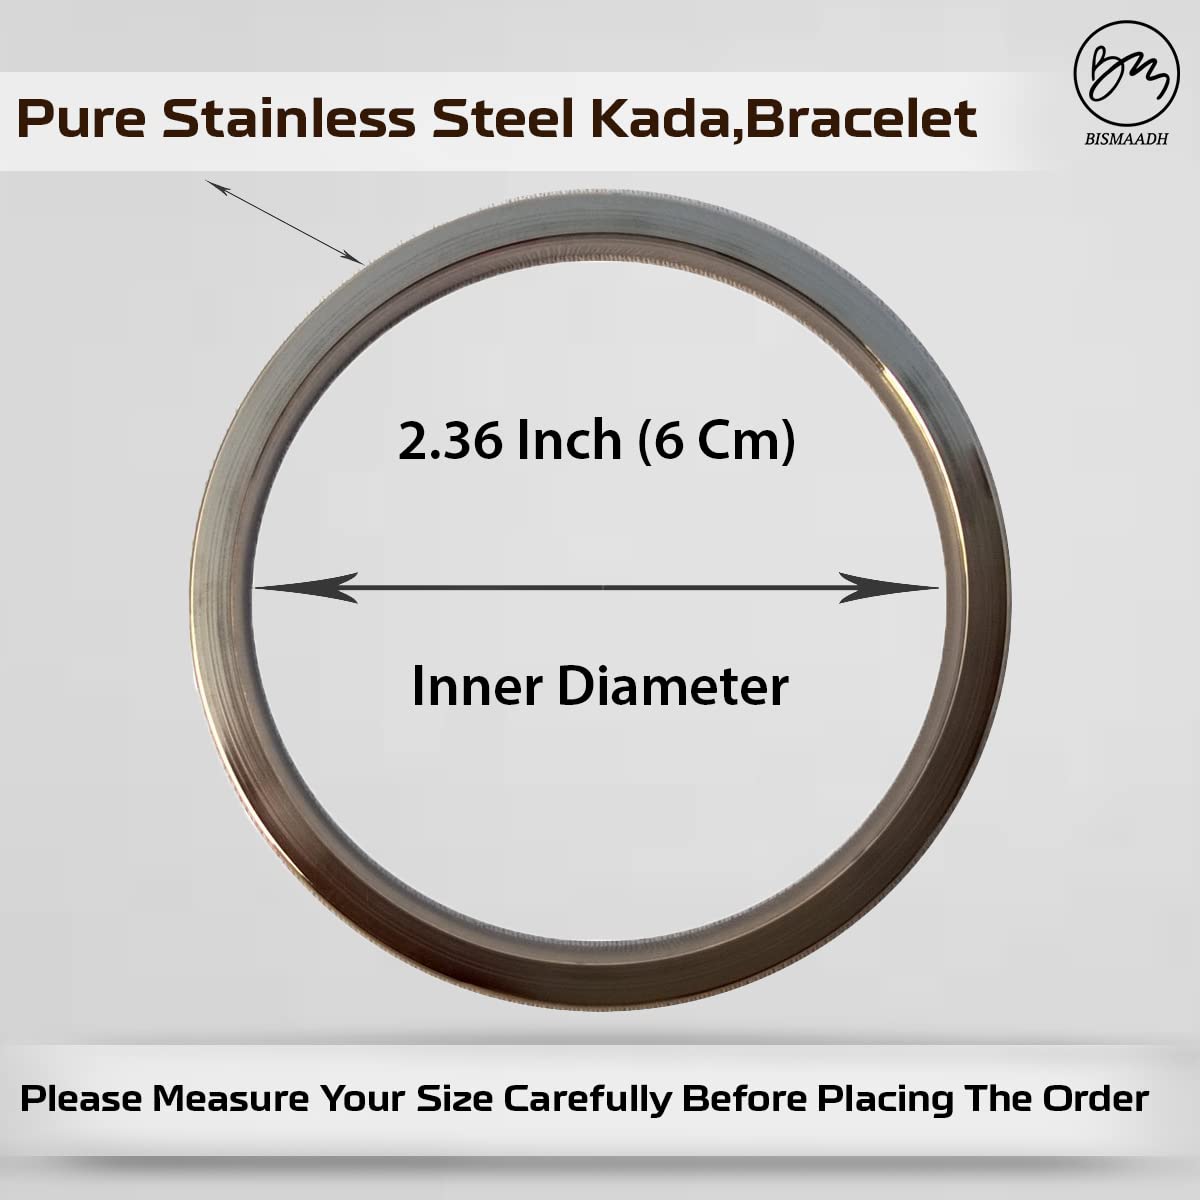 BISMAADH Sikh Religious Stainless Steel Kada Bracelet Steel Kara For Men and Women Silver Punjabi Kara 7MM Thickness